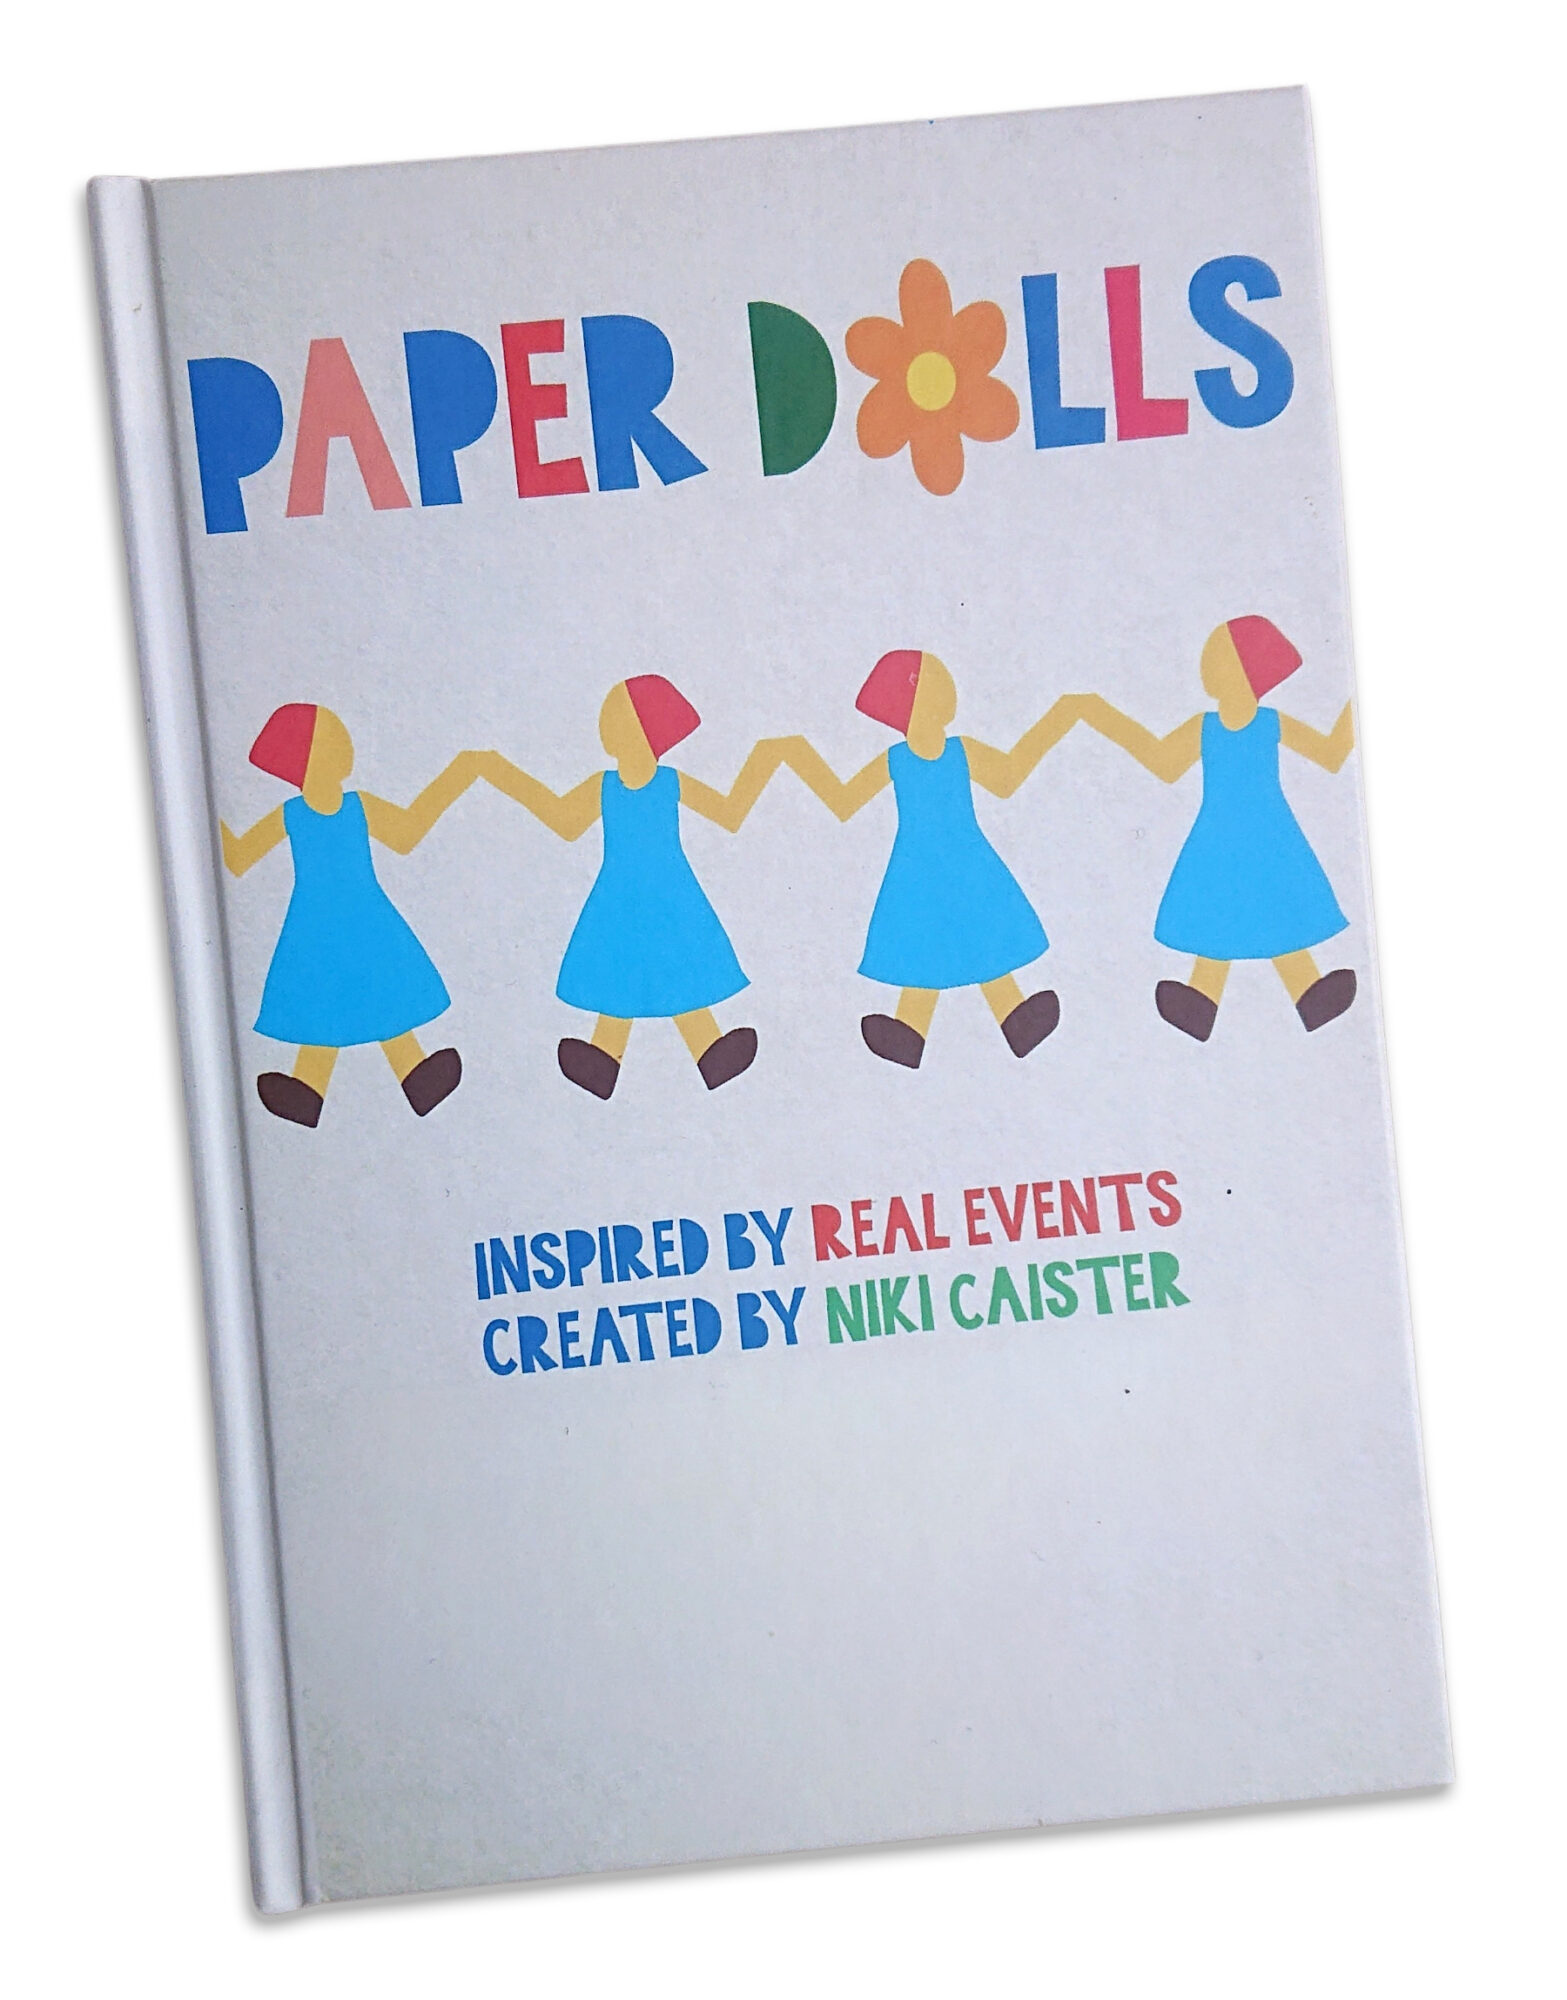 'Paper Dolls' hardbacked copy of the script